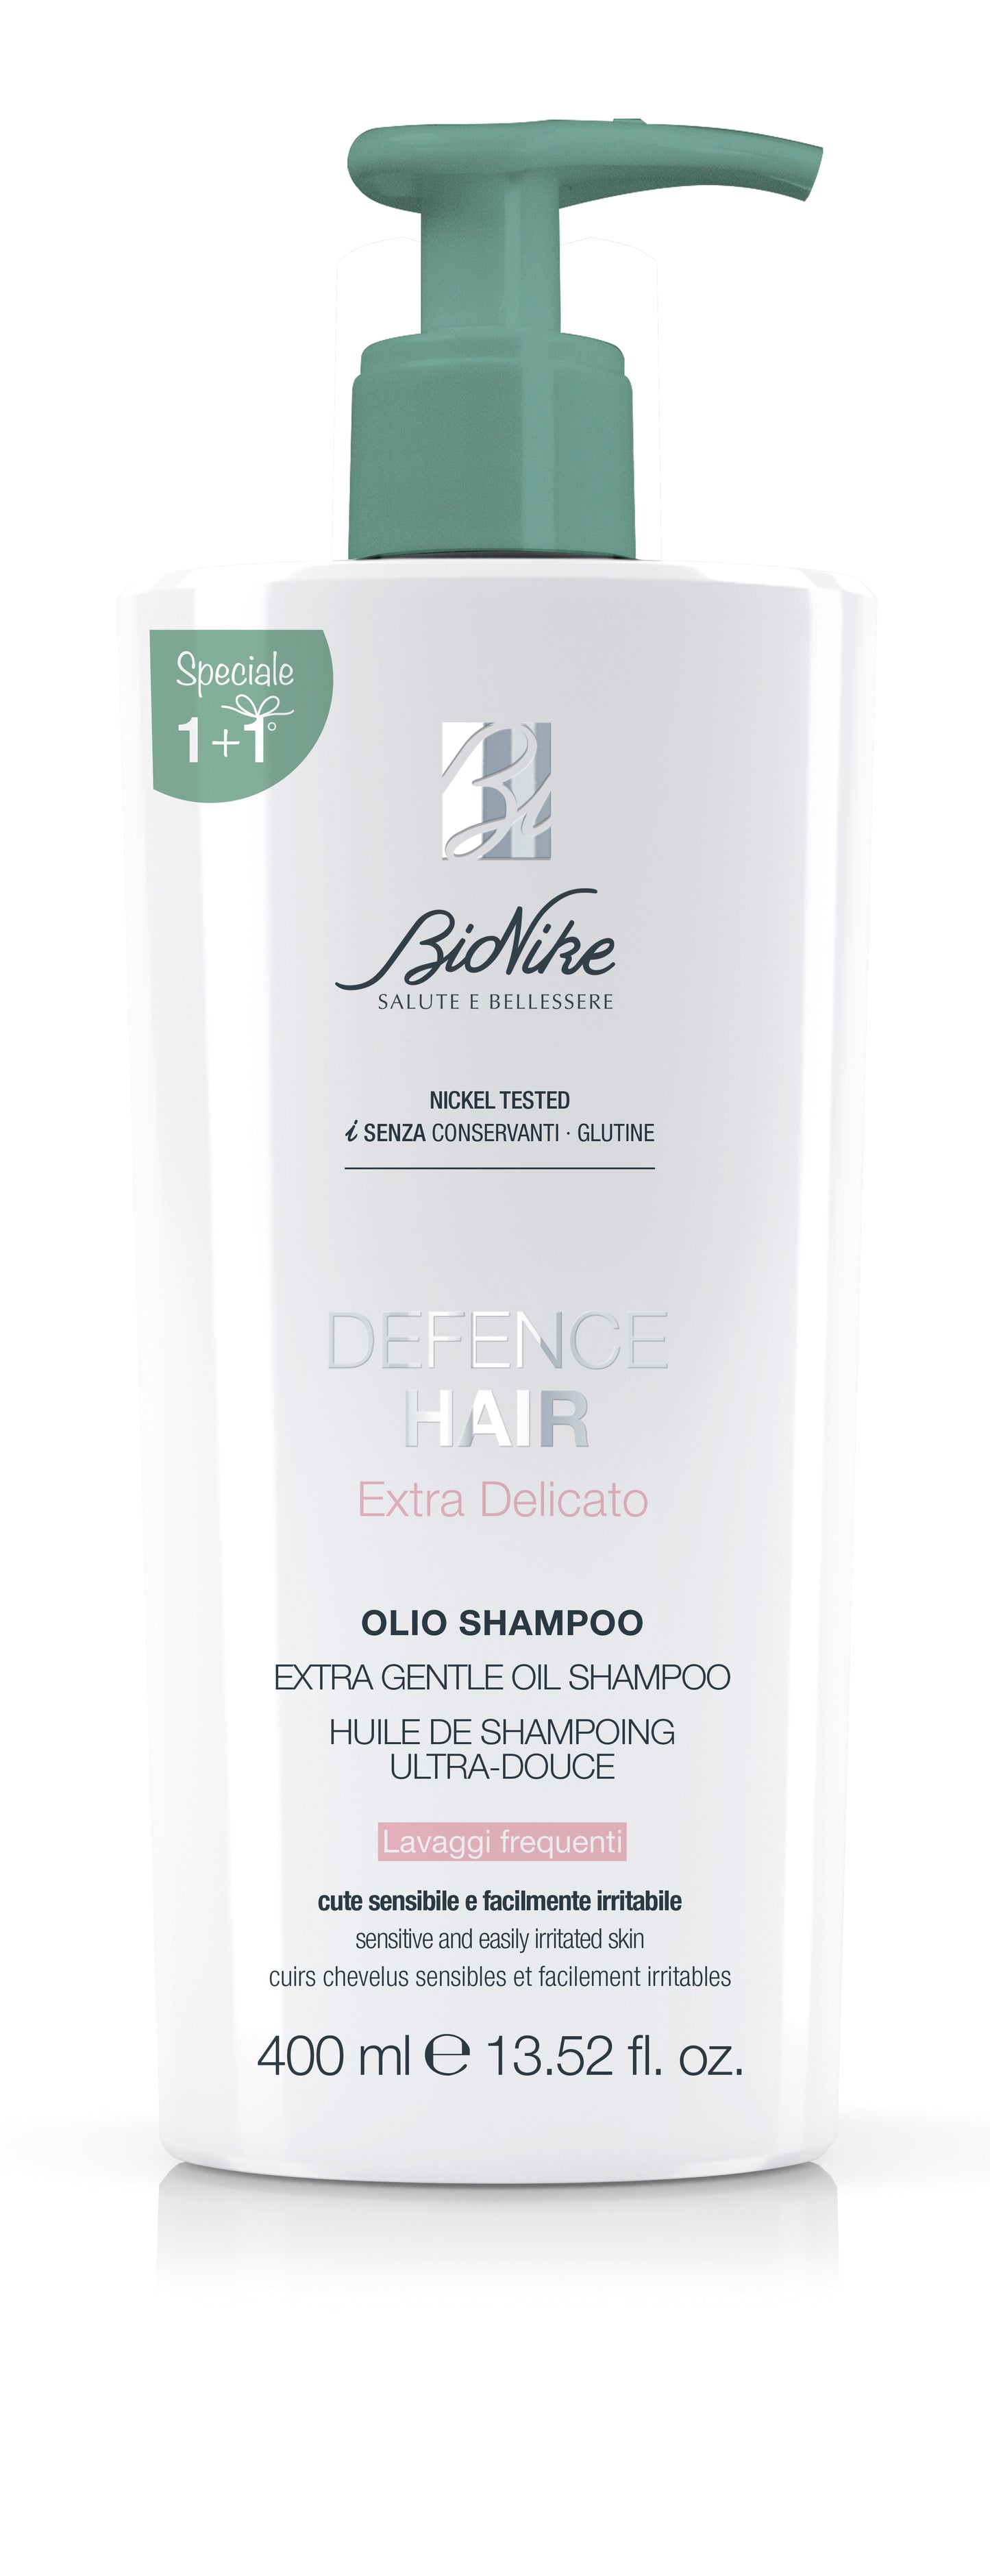 Bionike Defence hair olio shampoo 400 ml